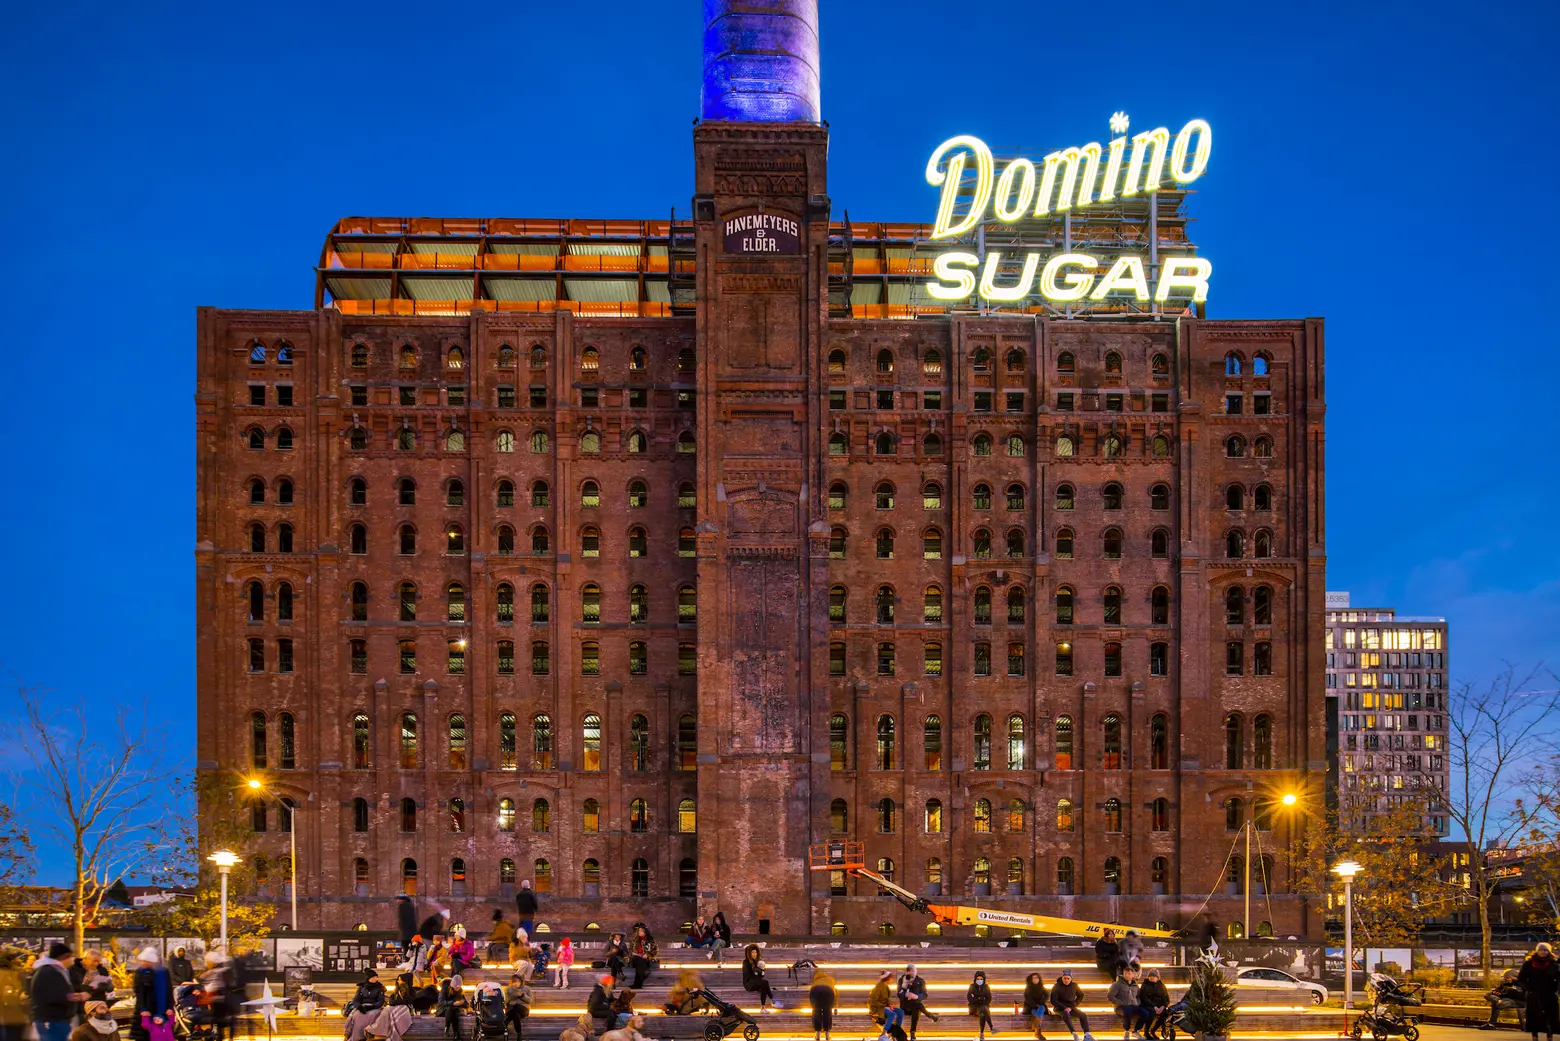 Iconic yellow ‘Domino Sugar’ sign returns to Brooklyn